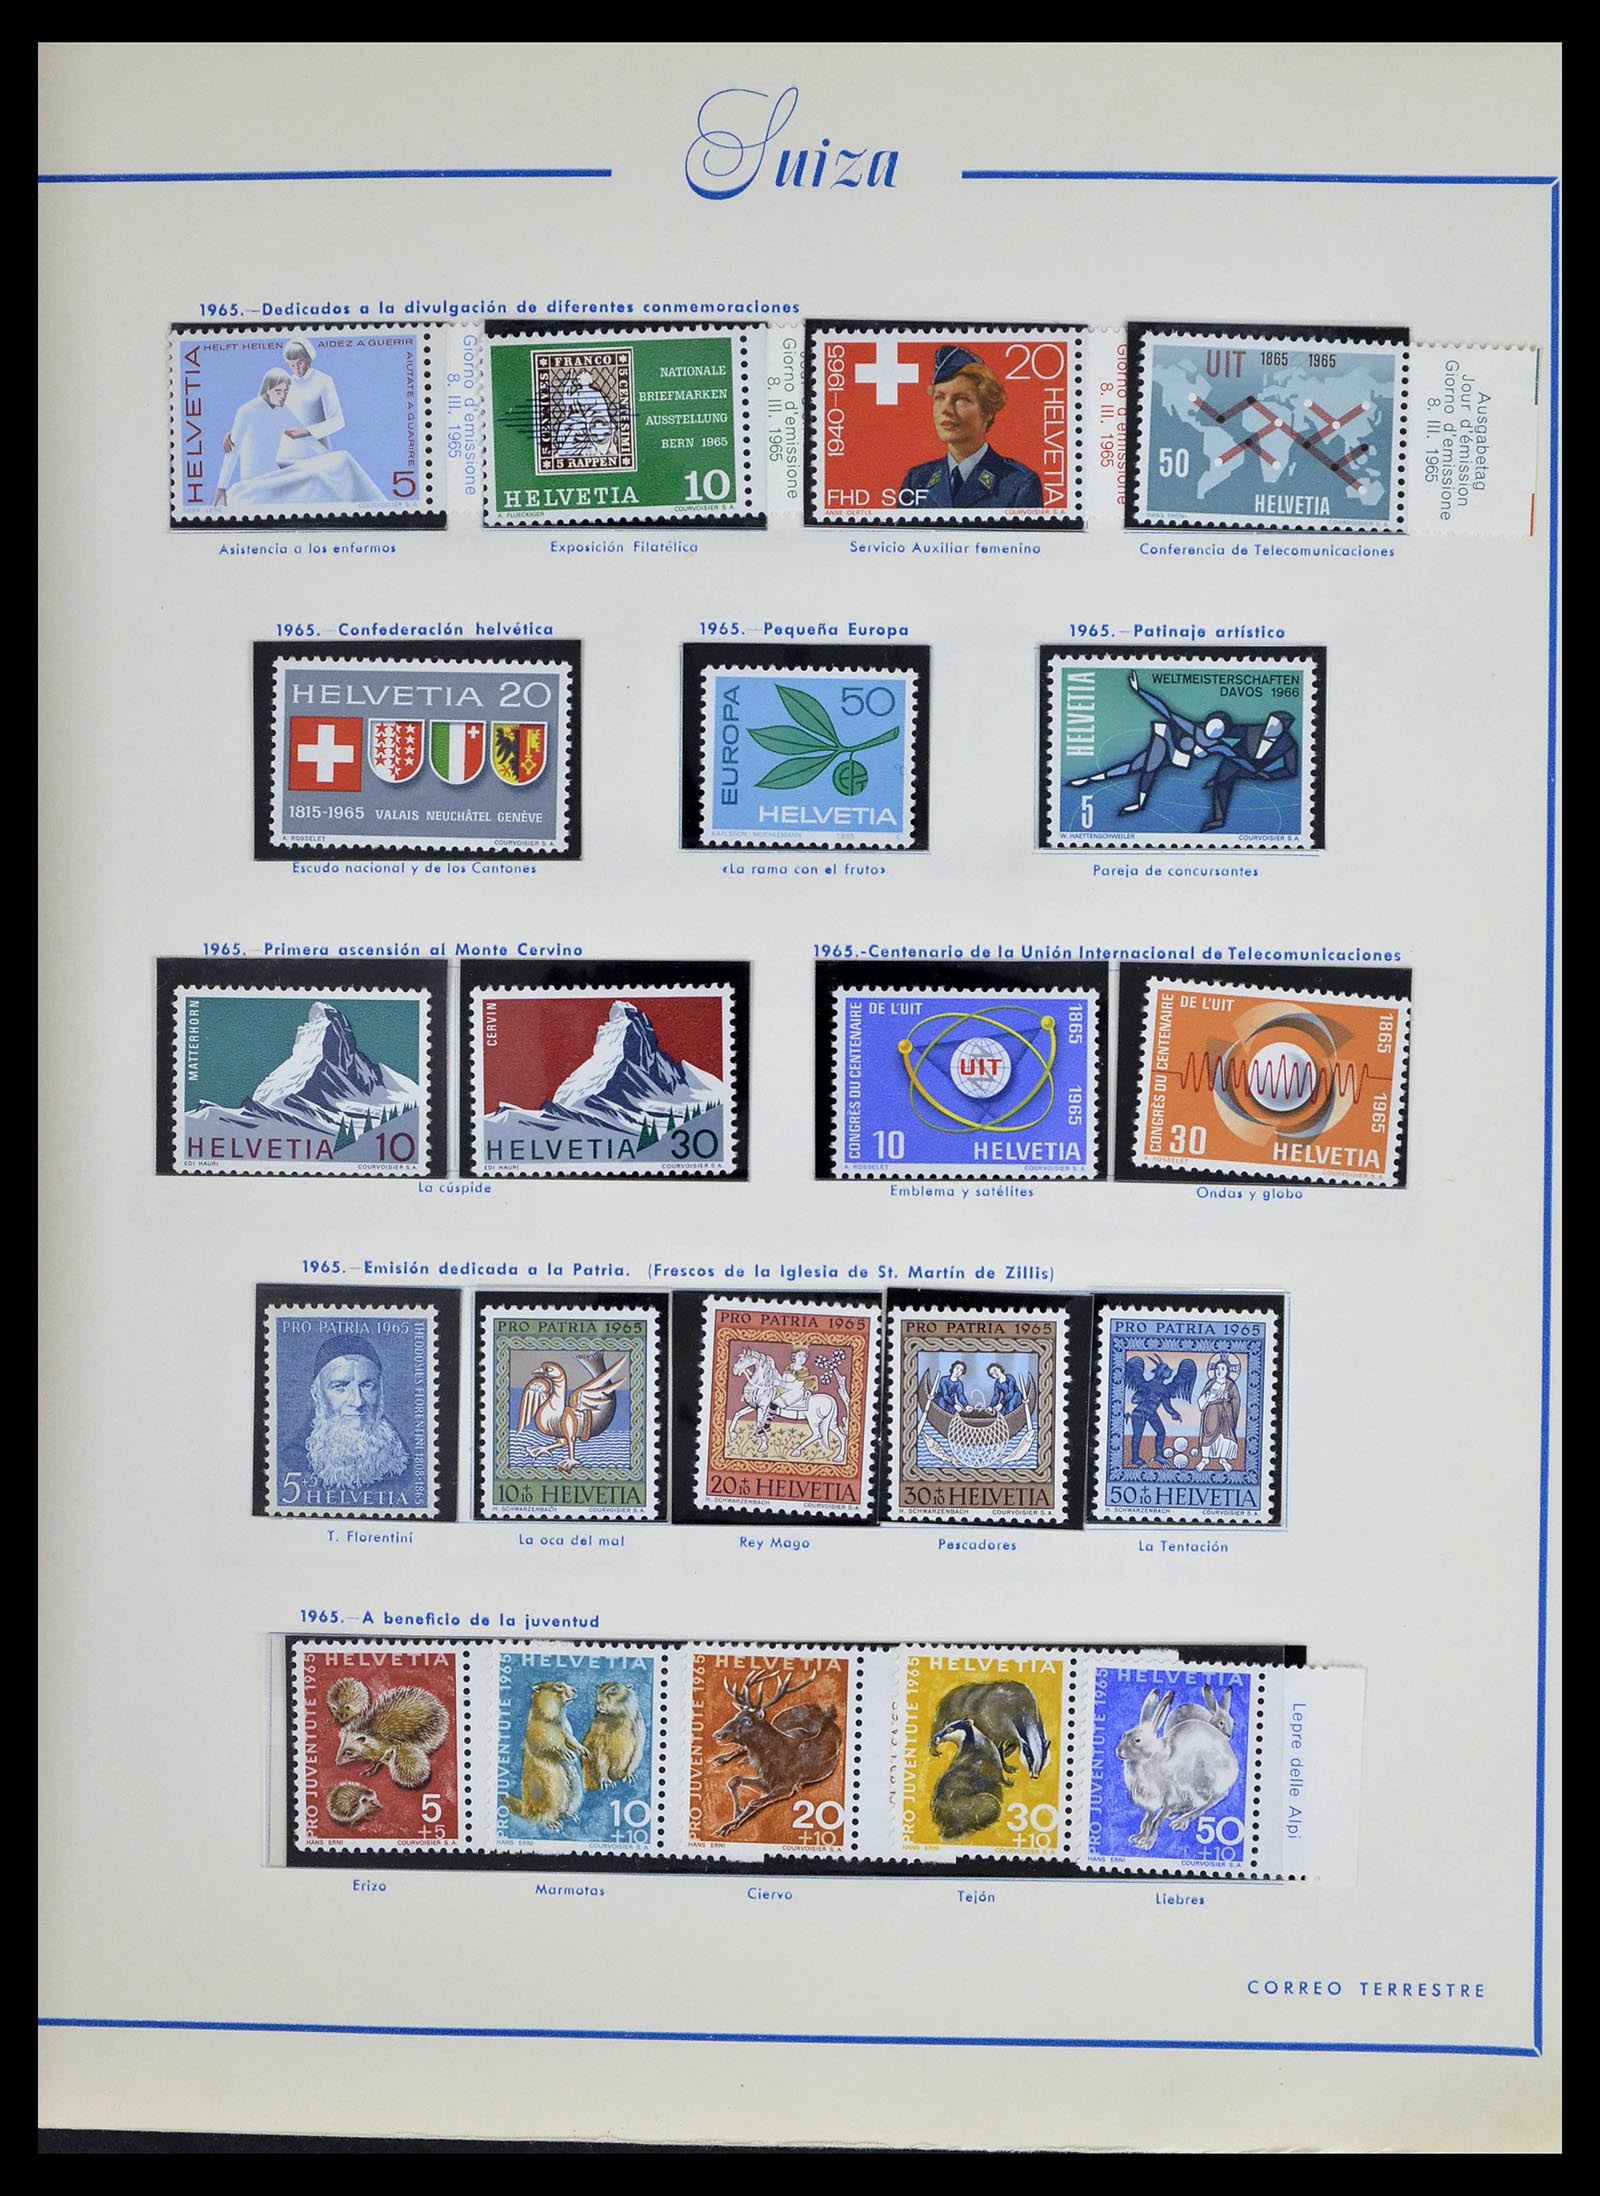 39217 0044 - Stamp collection 39217 Switzerland 1850-1986.